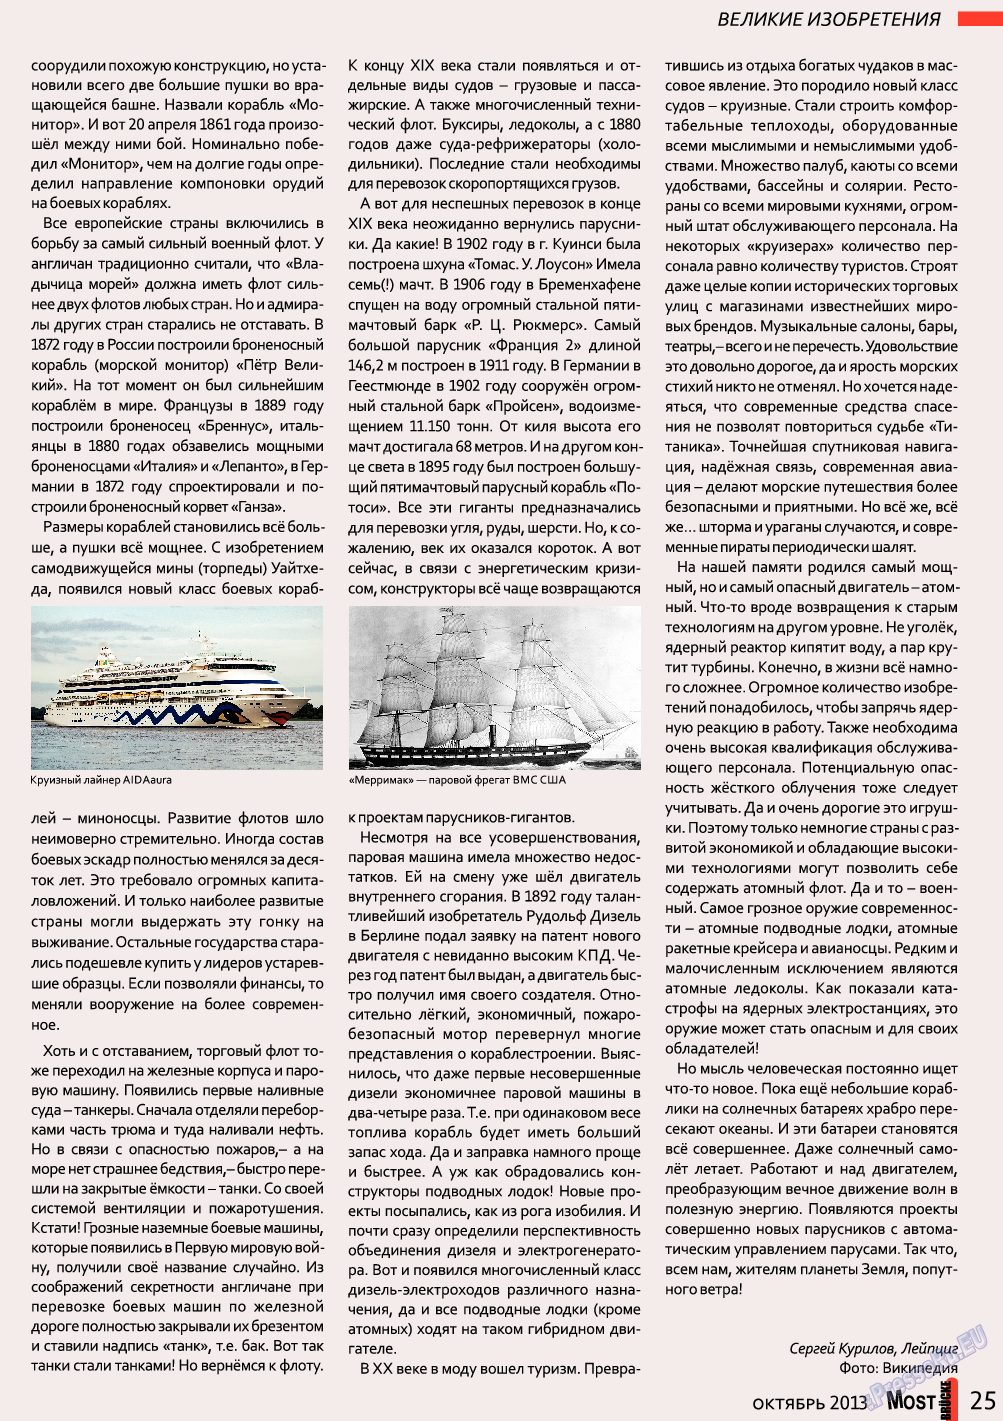 Мост, журнал. 2013 №10 стр.25